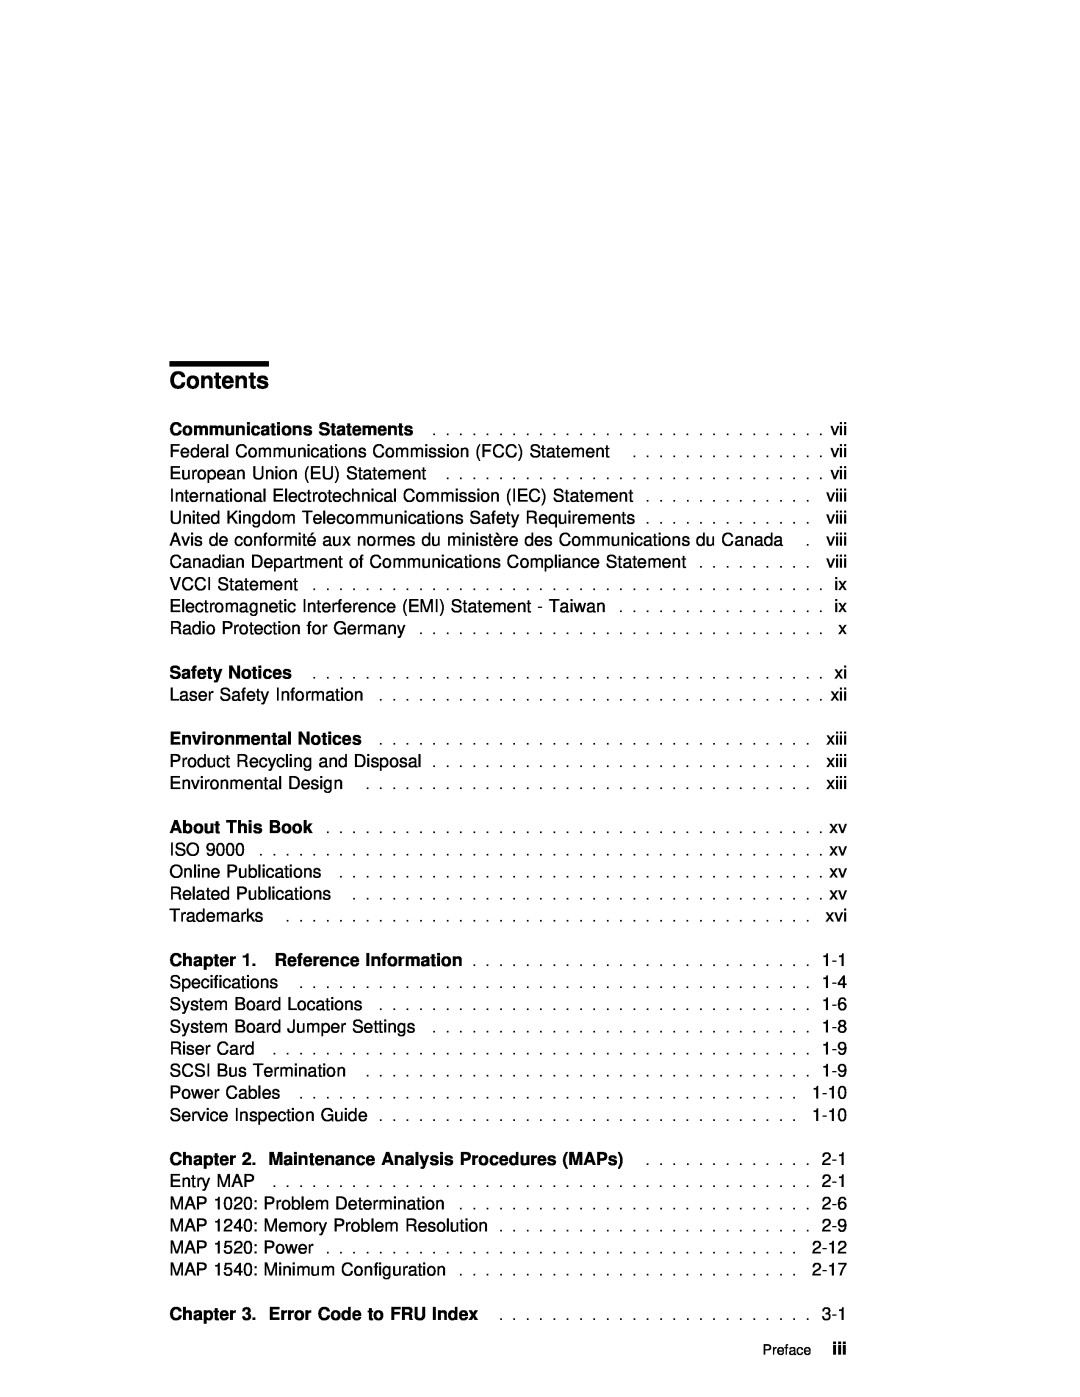 IBM B50 manual Contents 